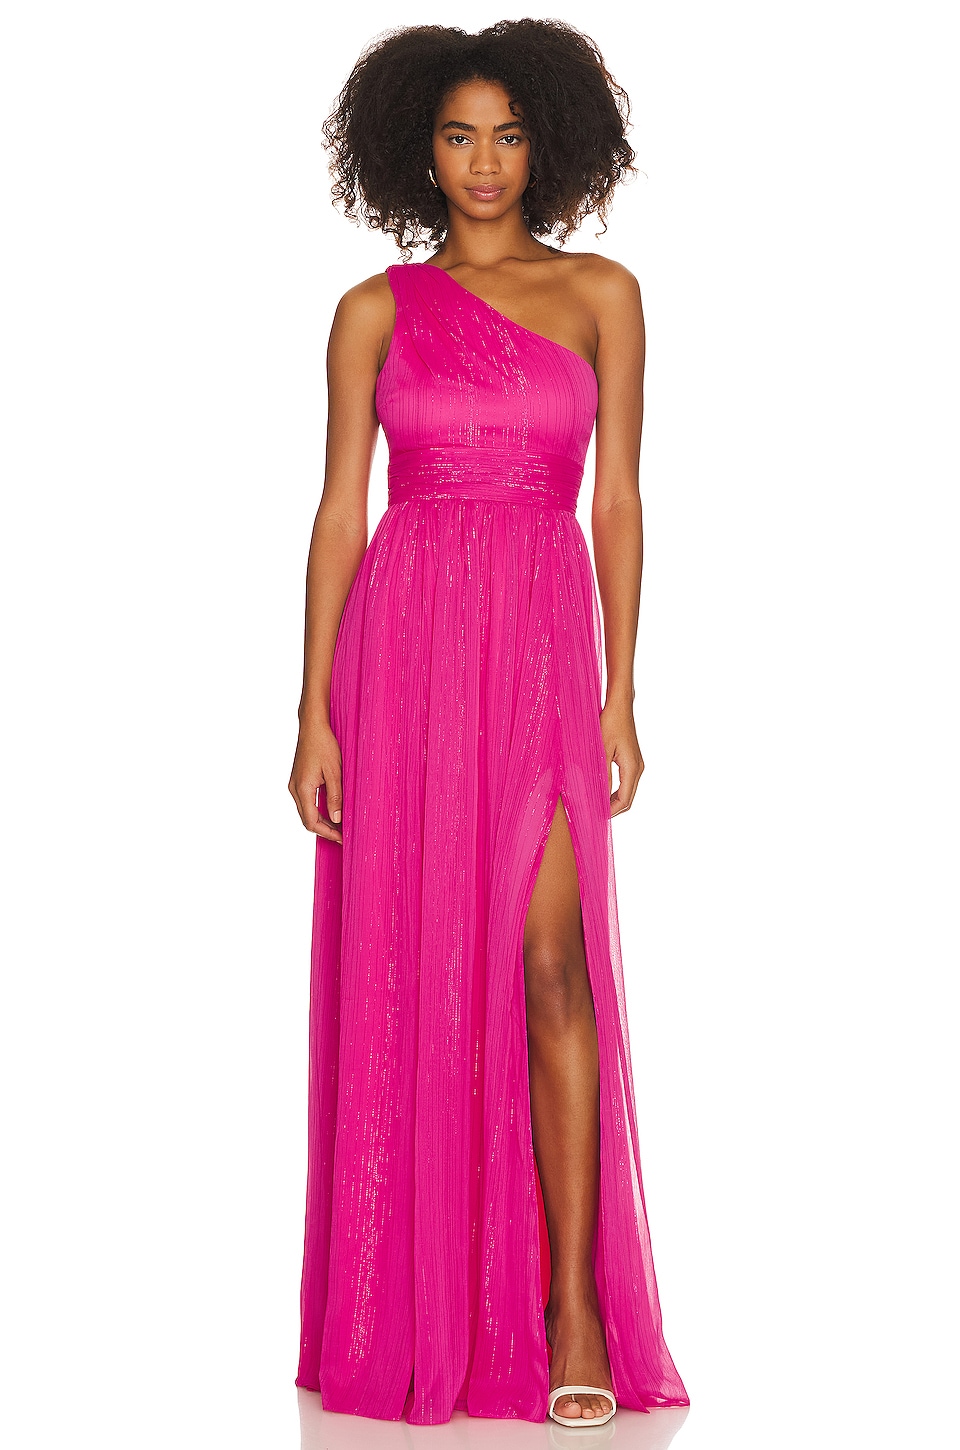 Neon Fuchsia Long Prom Dress style CD0179 - Prom-Avenue